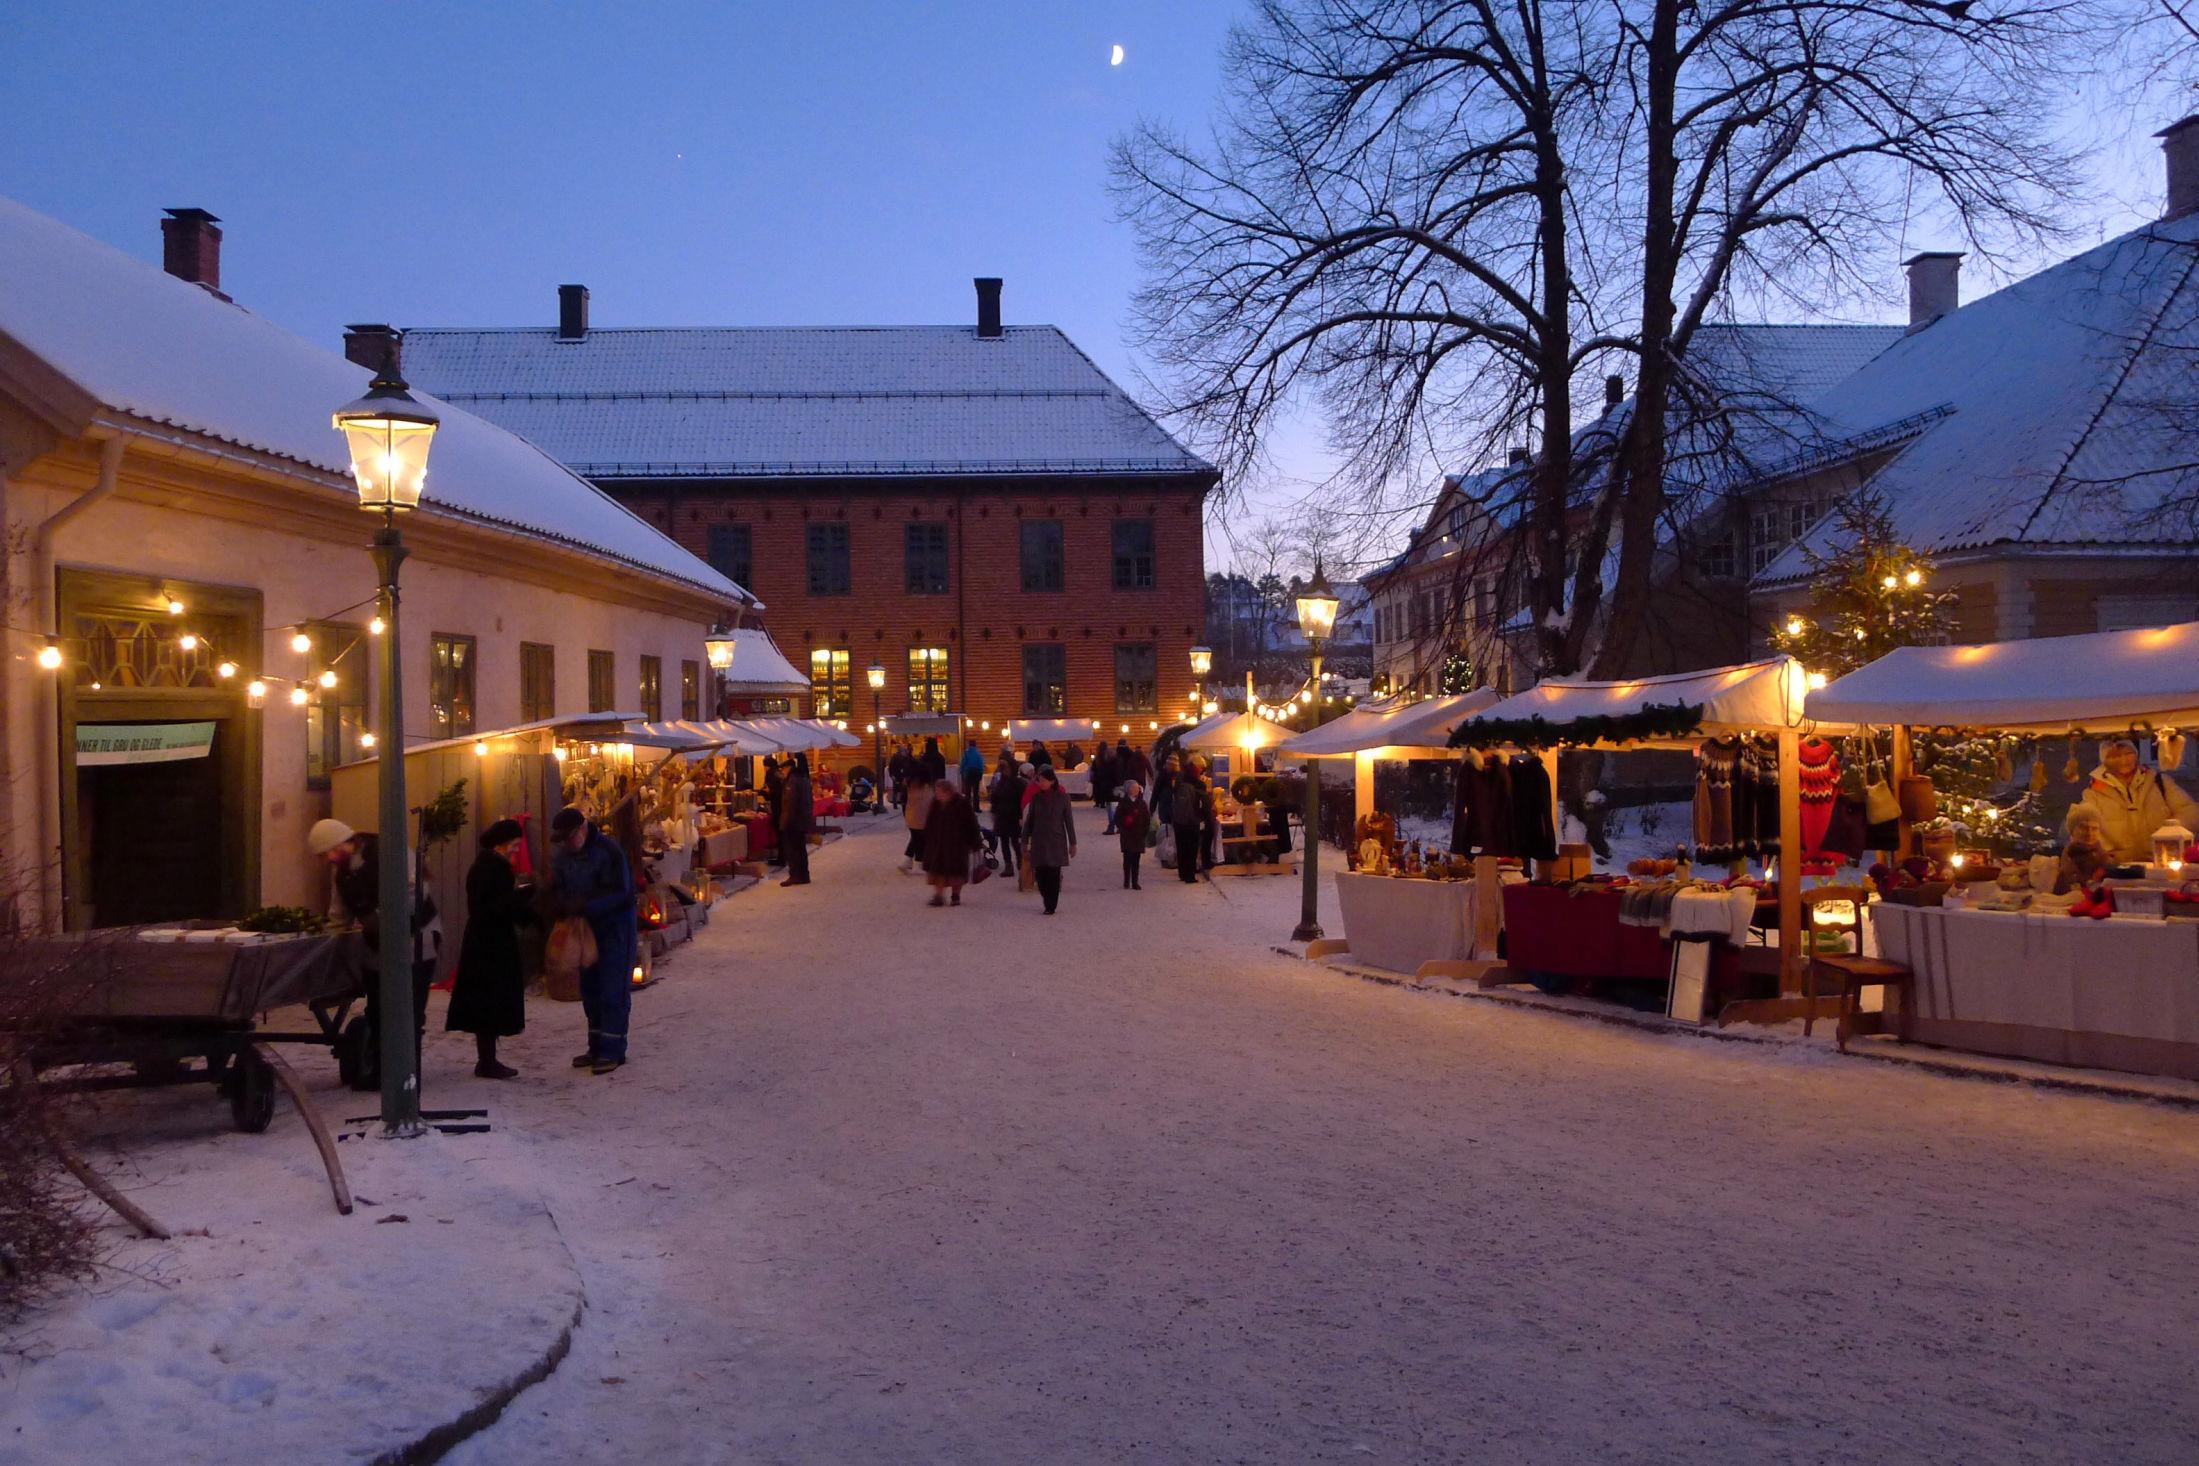 MARKEDSBODER: På Folkemuseet på Bygdøy får du jøpt julegodteri og julegaver i de mange markedsbodene rundt omkring på museet. Tekst: Foto: Paal Mork/Folkemuseet.